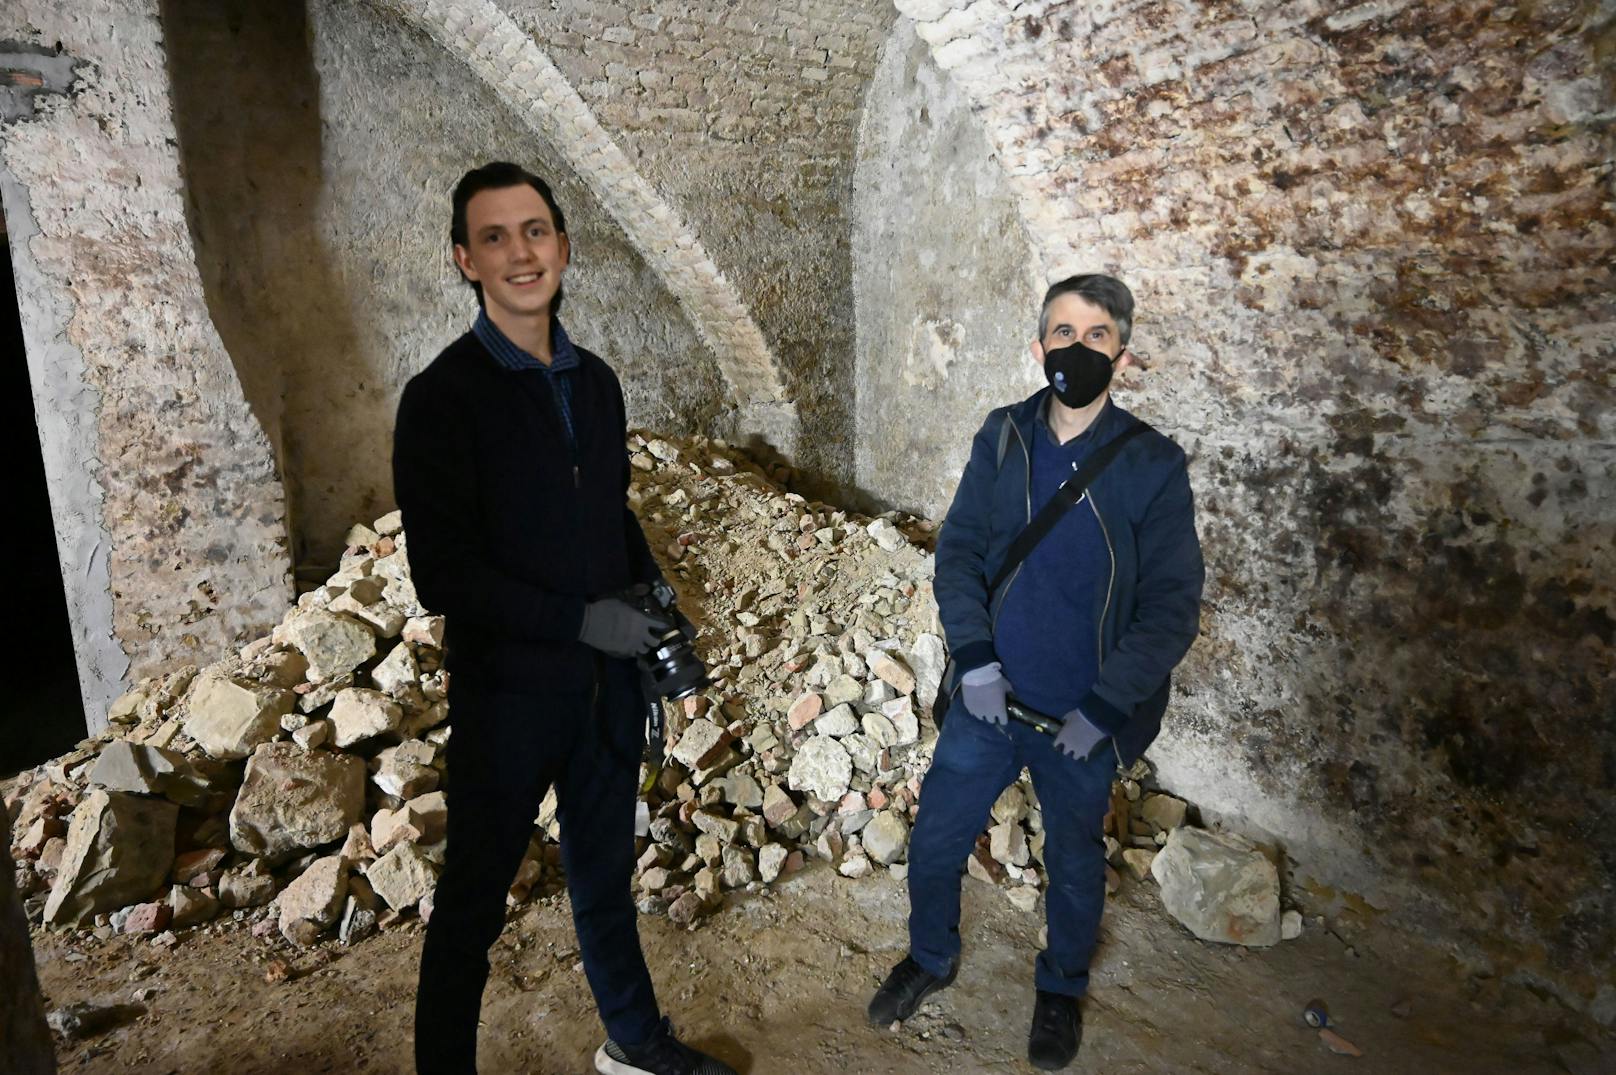 Fotograf Lukas Arnold (links) und Historiker Marcello La Speranza...